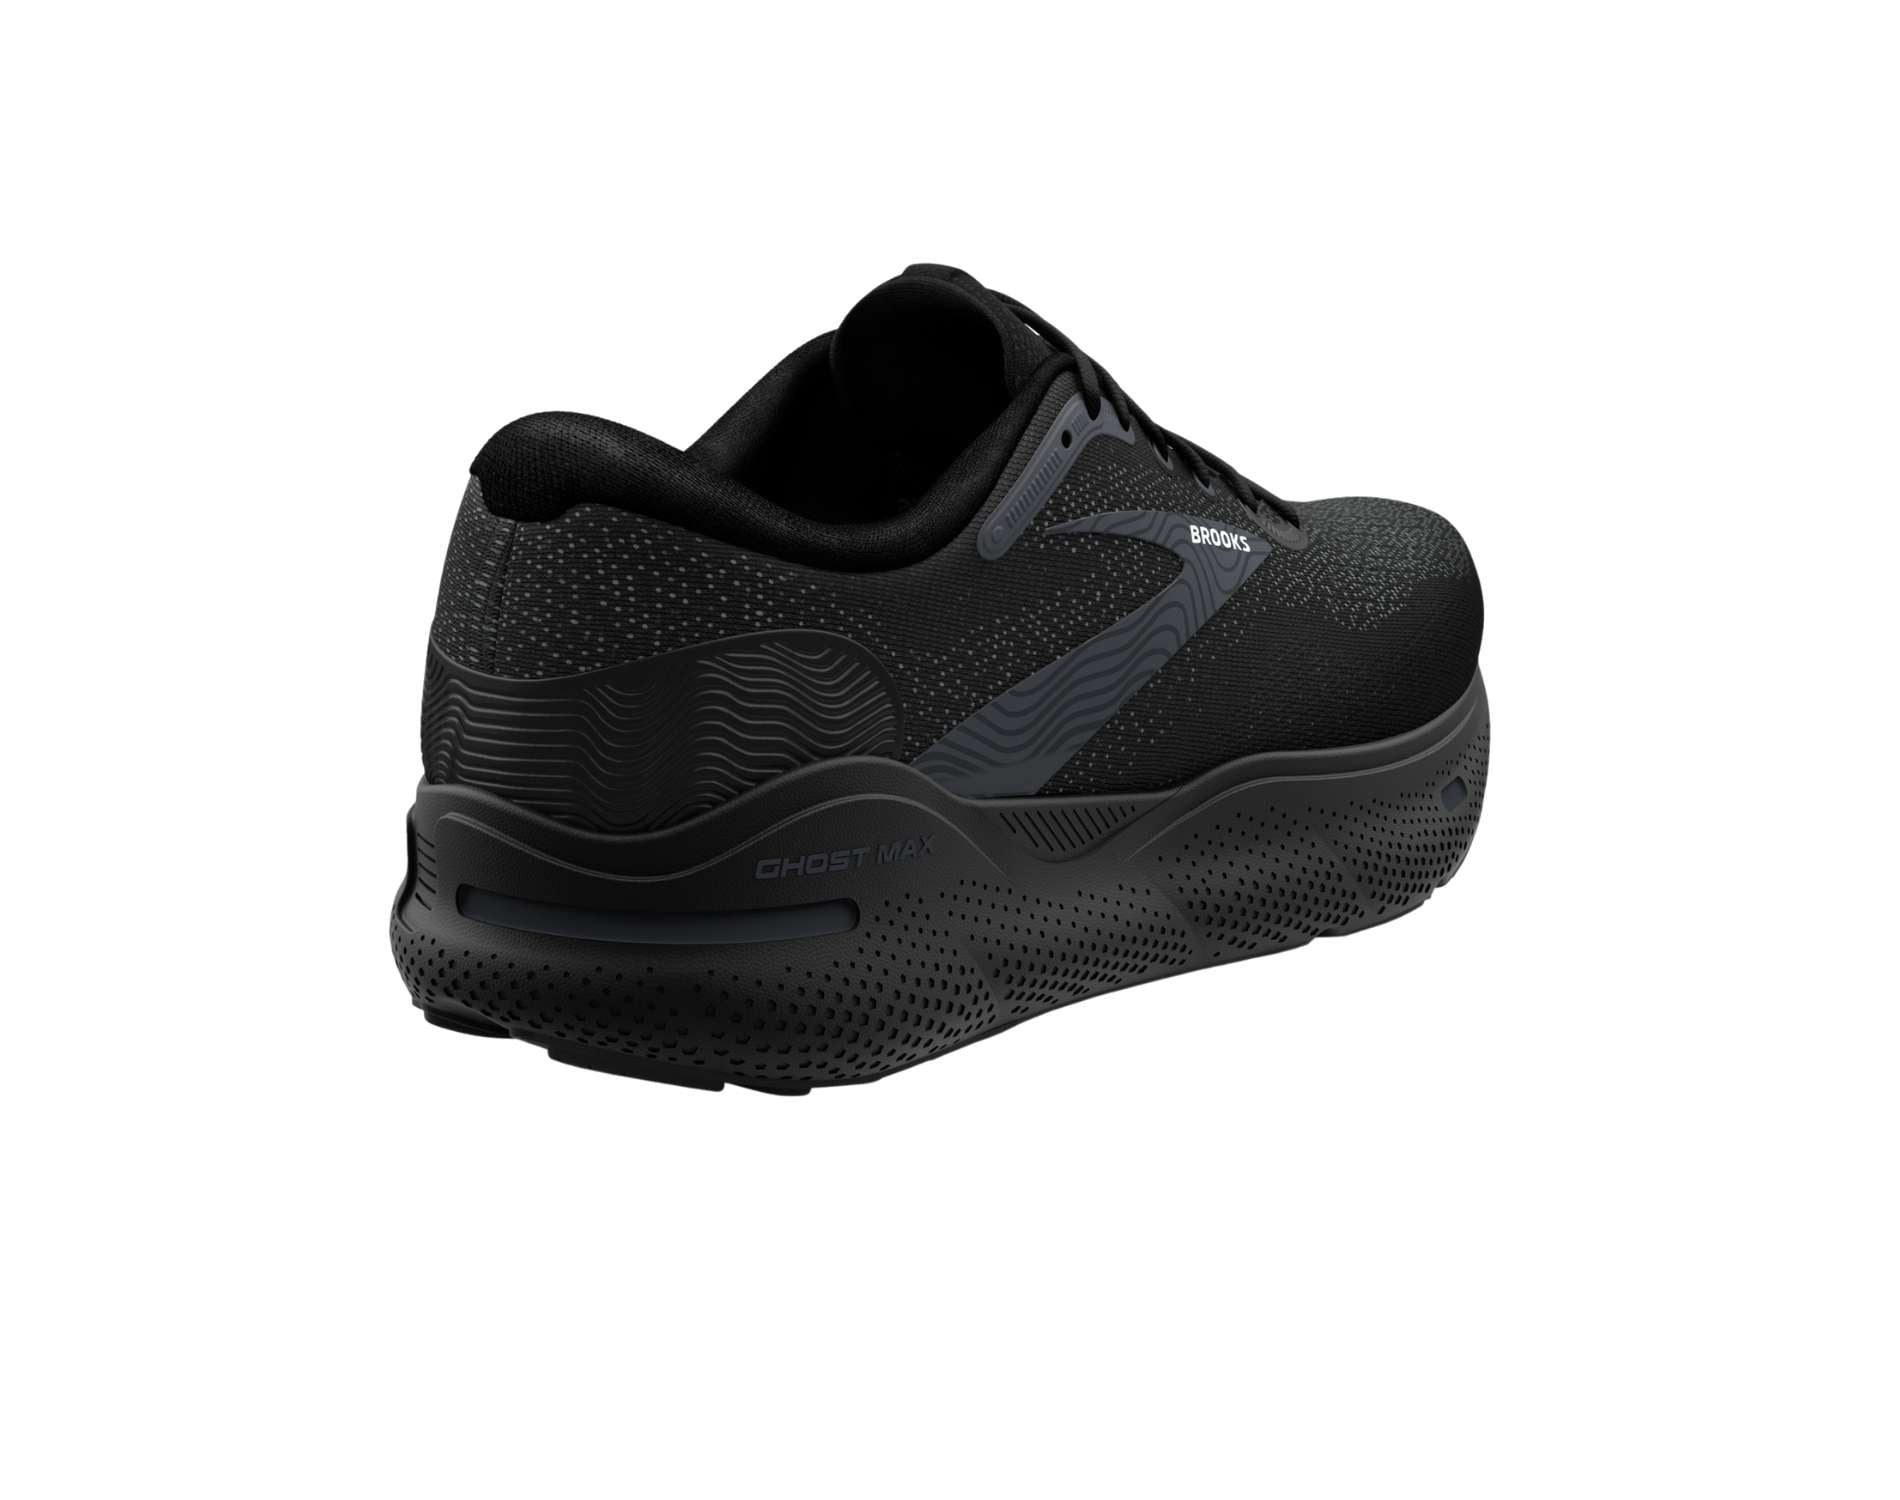 Brooks Ghost Max mens neutral running shoe in 2e wide width in black ebony colour